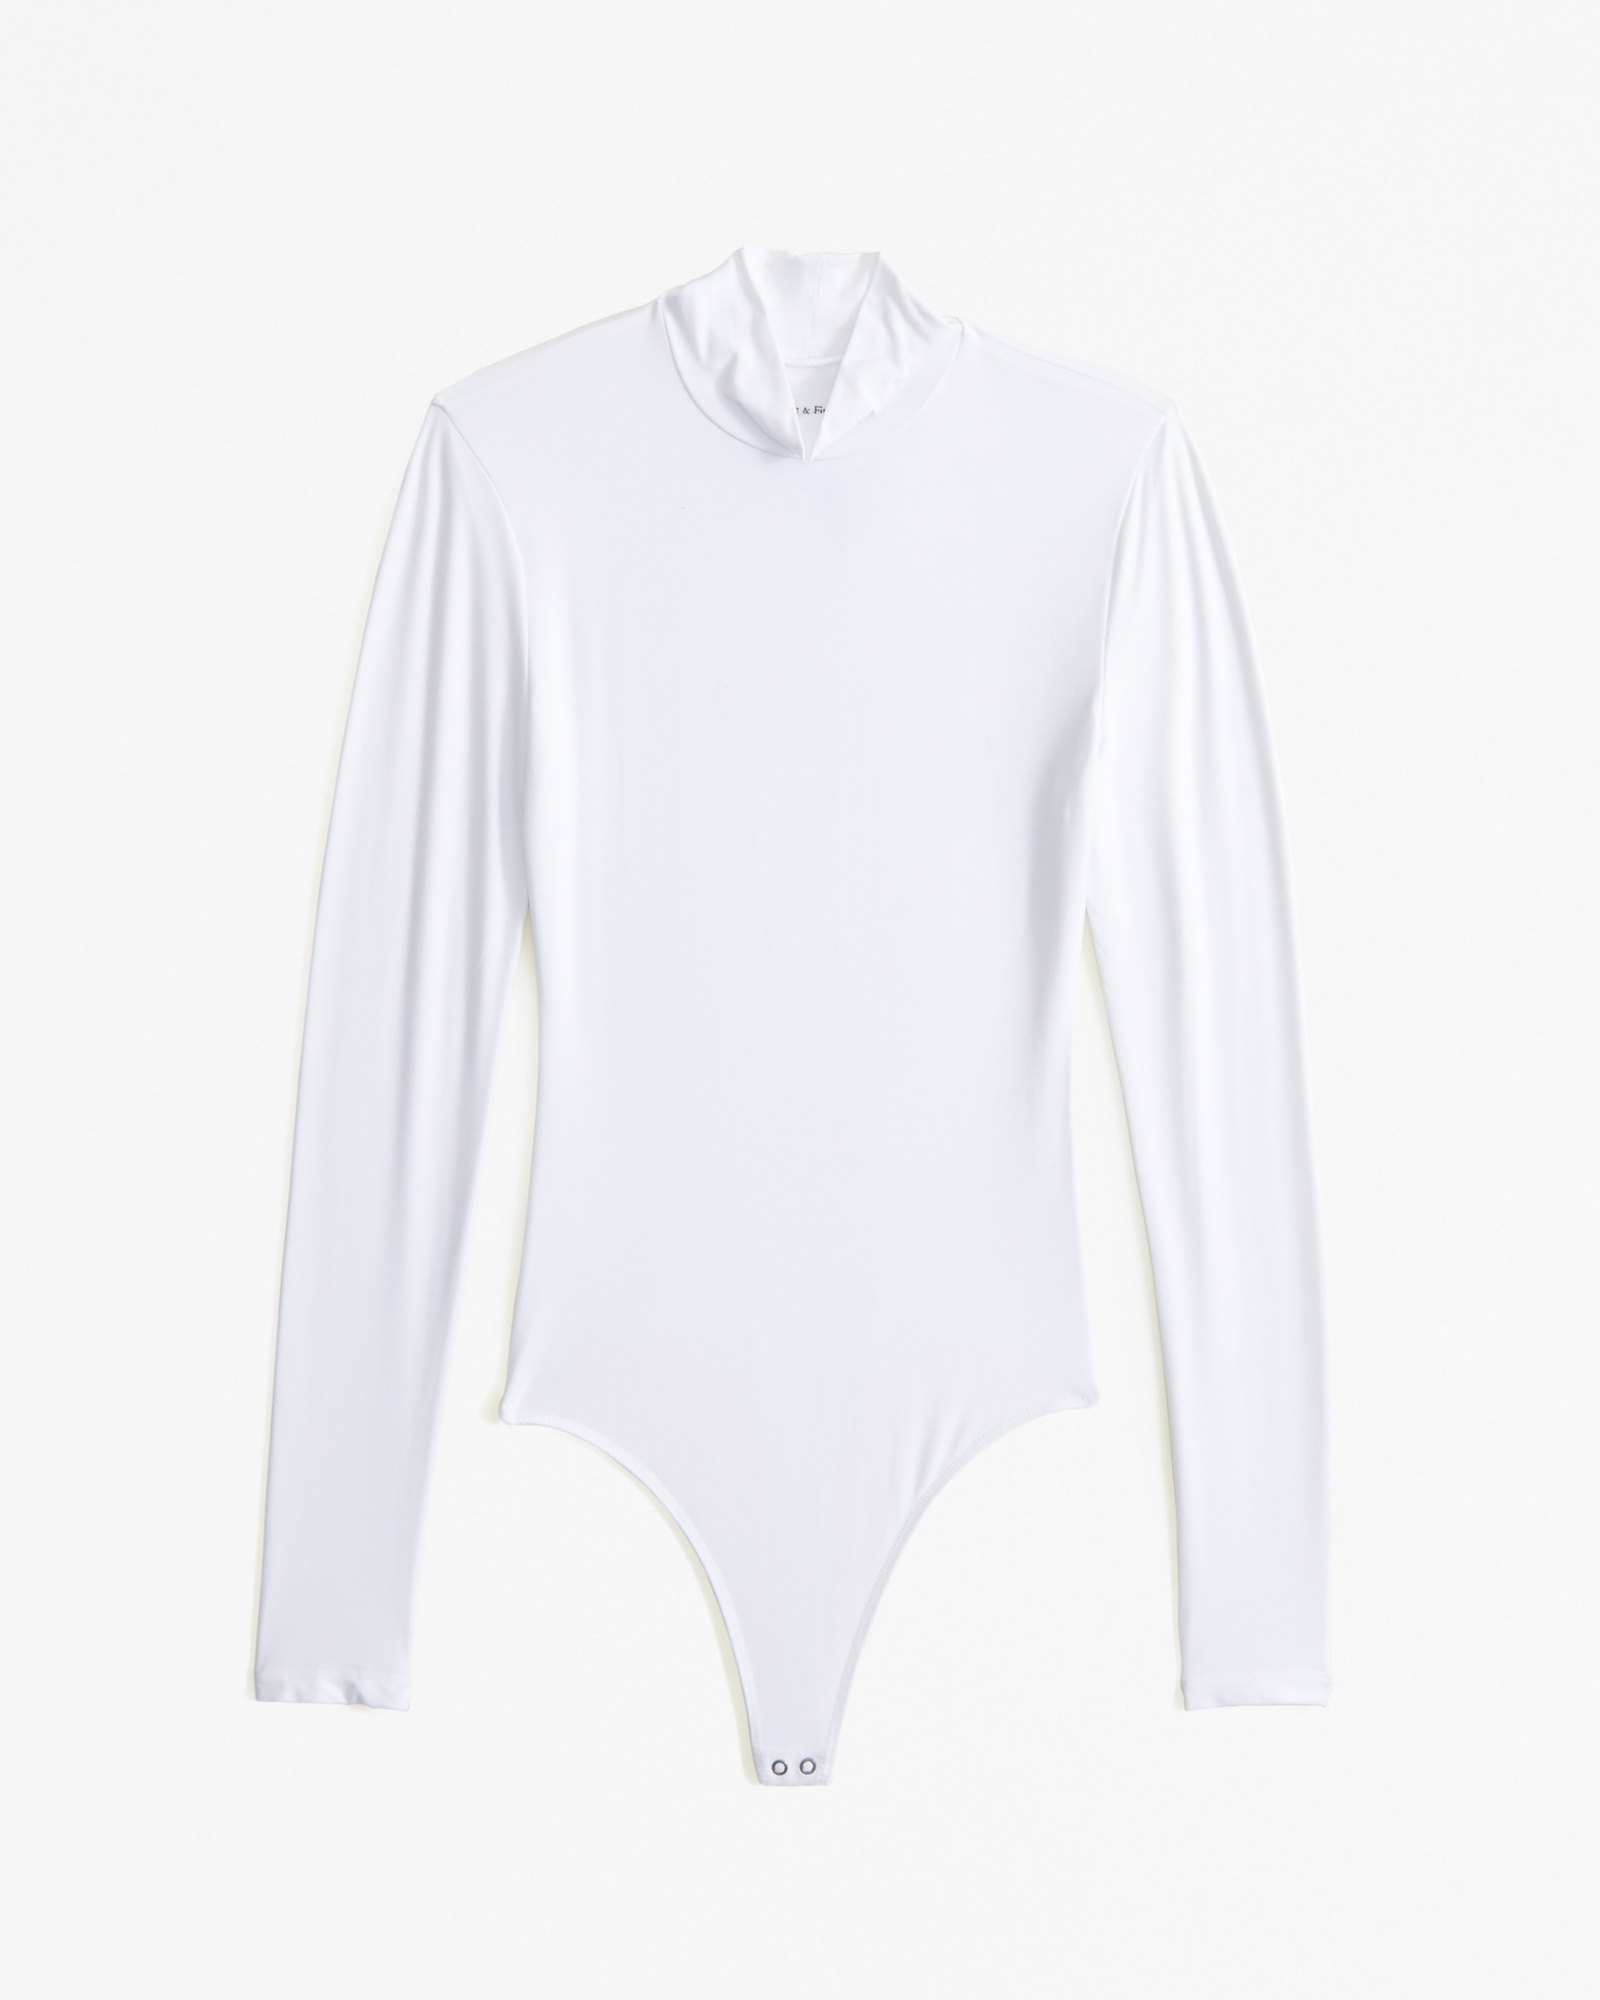 Mobeadon Long Sleeve Bodysuit for Women Turtleneck Stretchy Basic Tops  Bodysuit(S,Beige) at  Women's Clothing store